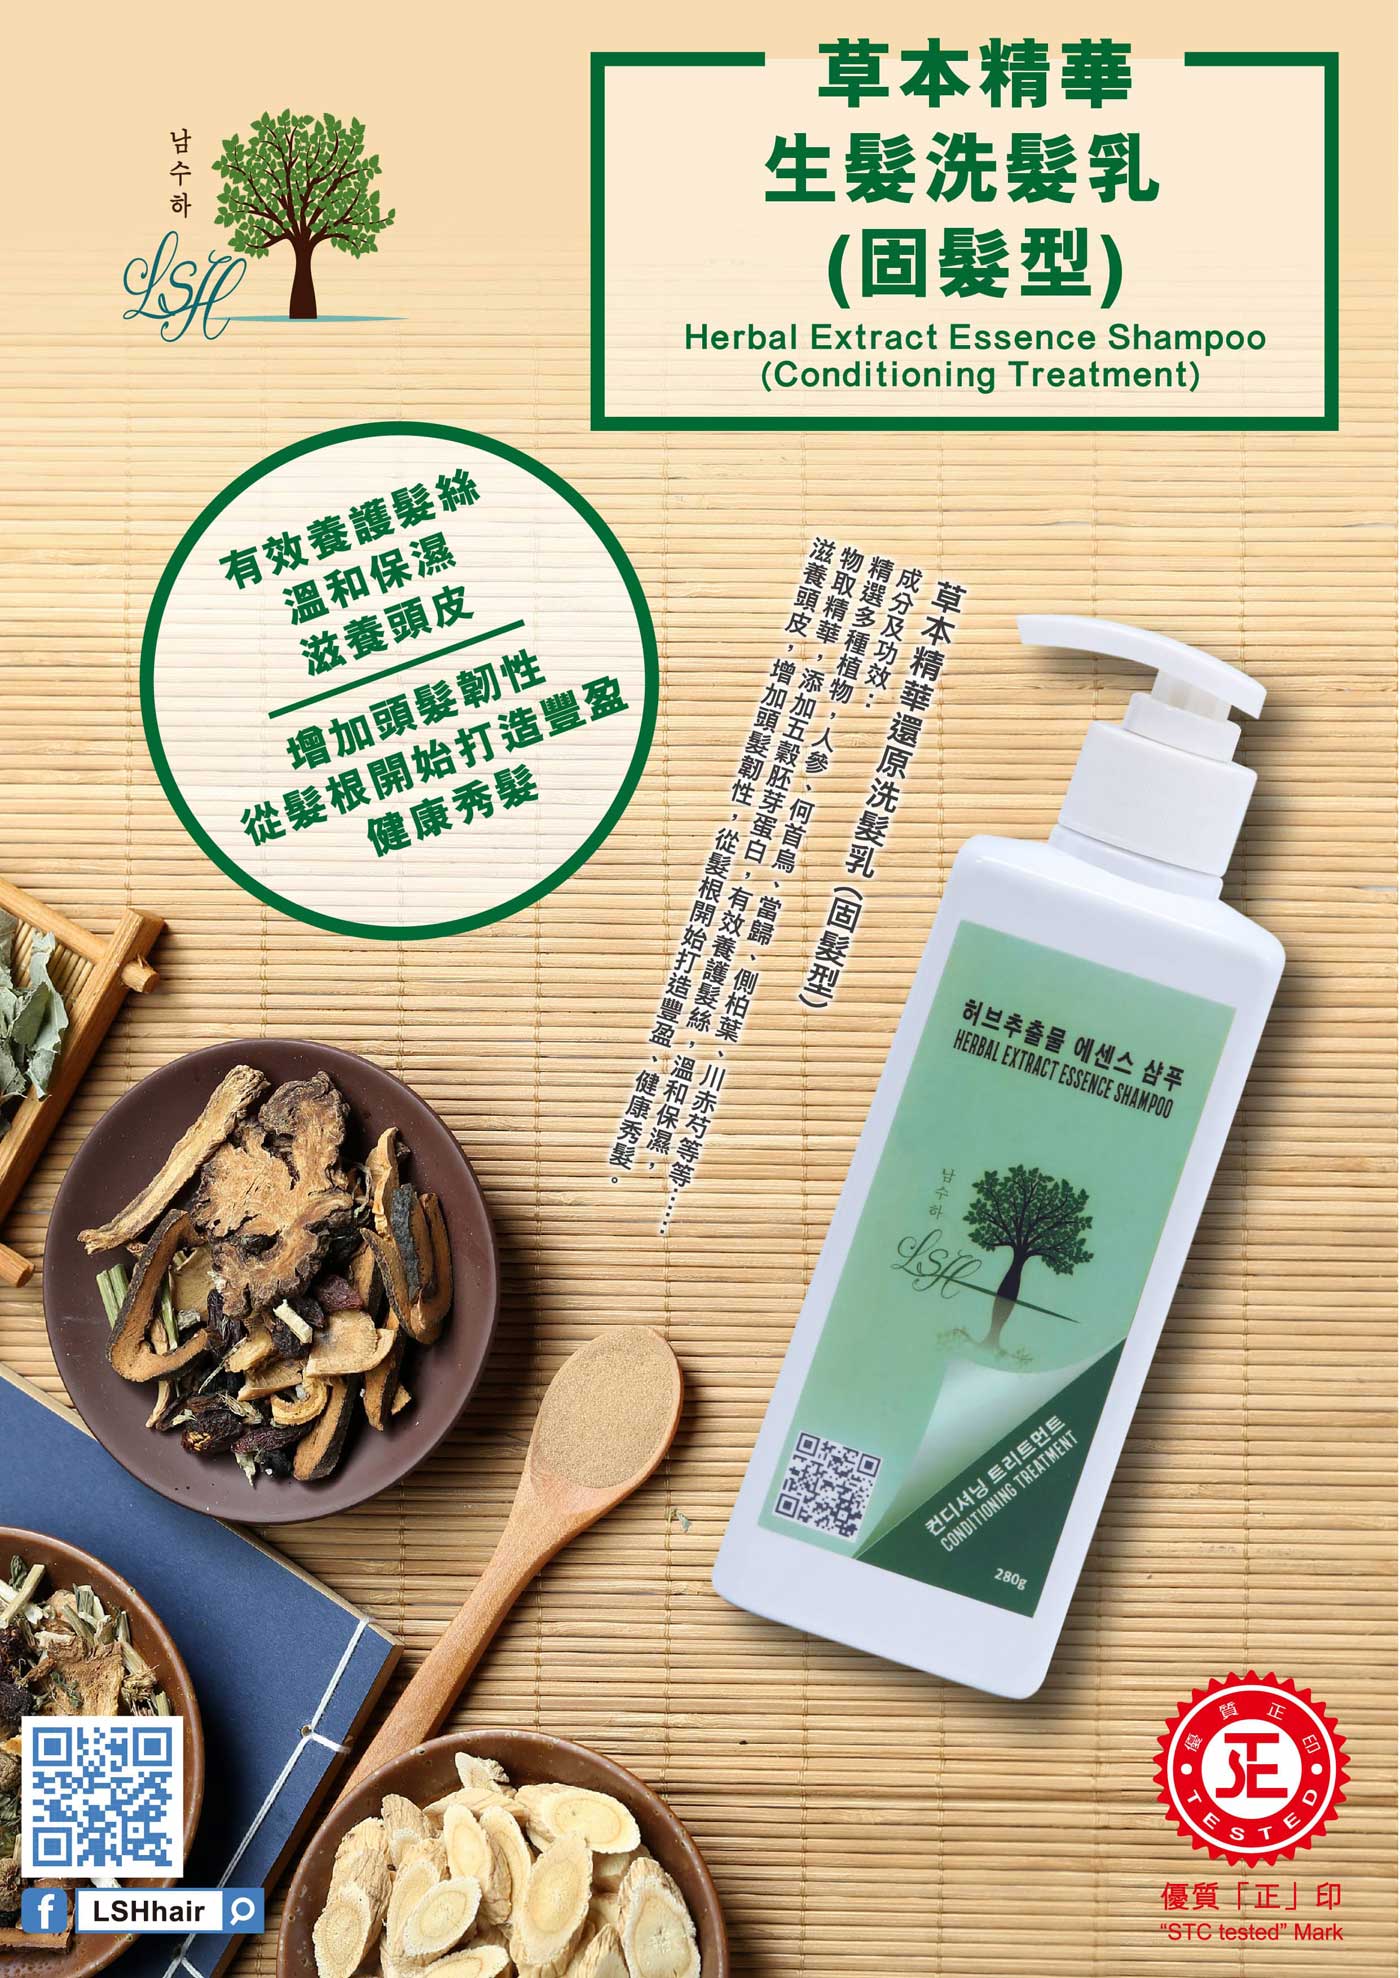 Herbal Extract Essence Shampoo